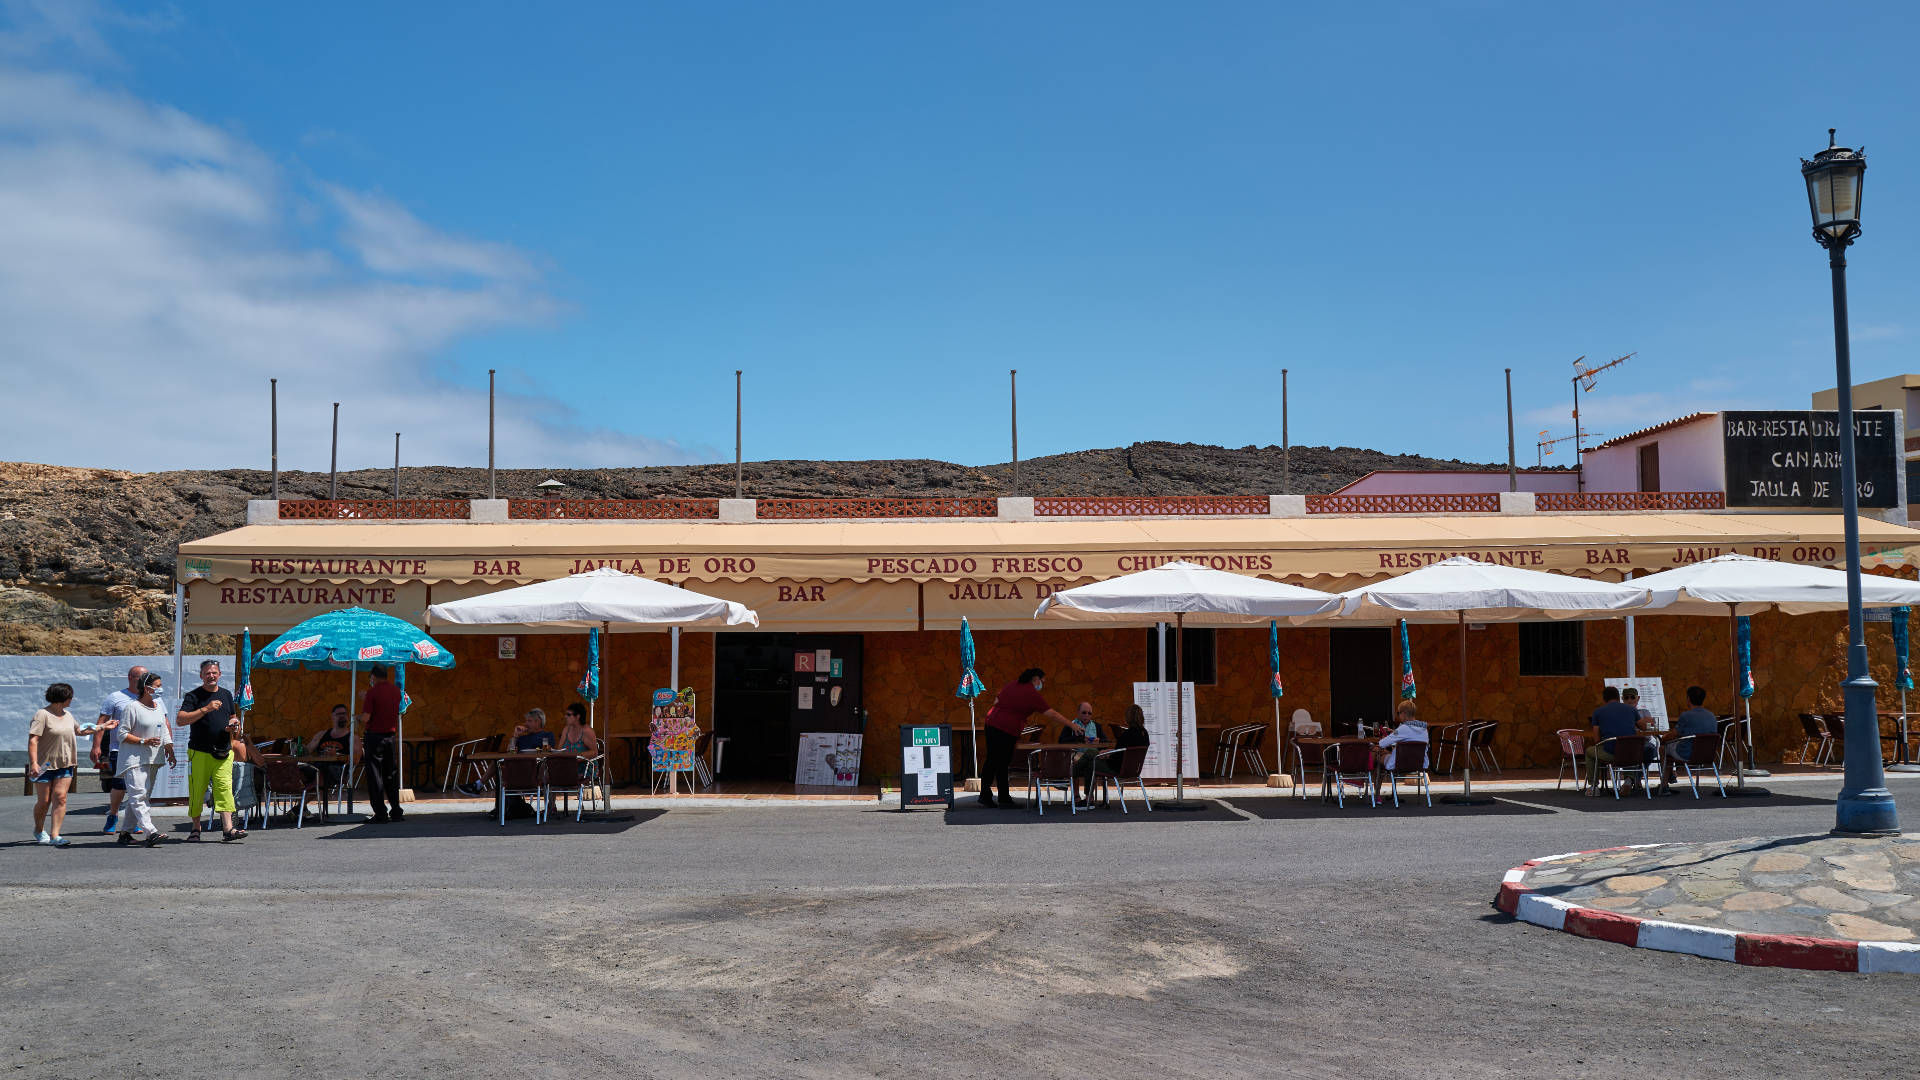 Der Ort Ajuy Fuerteventura.